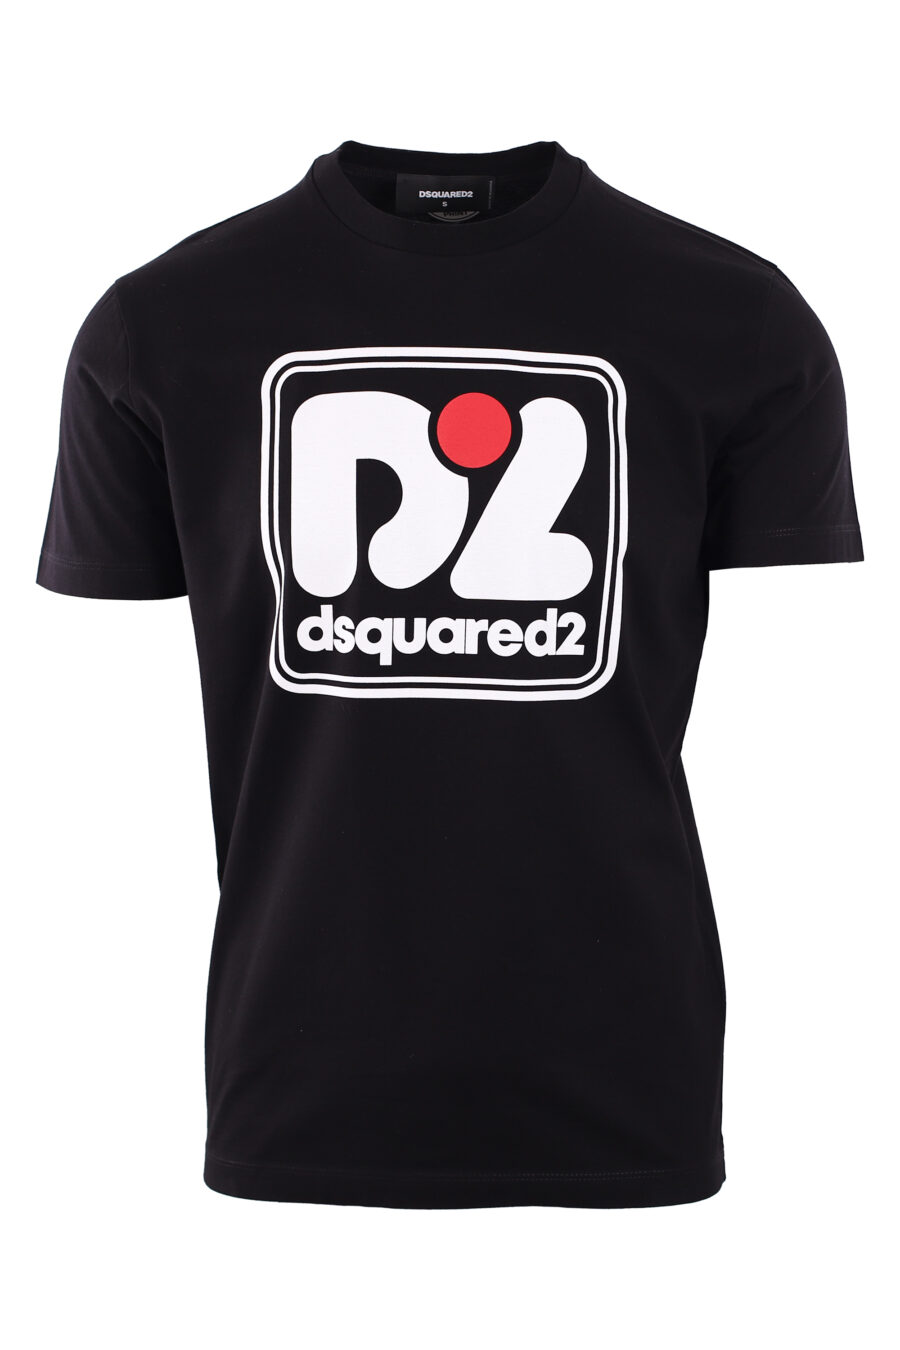 Camiseta negra con logo "D2" en cuadrado blanco - IMG 2899